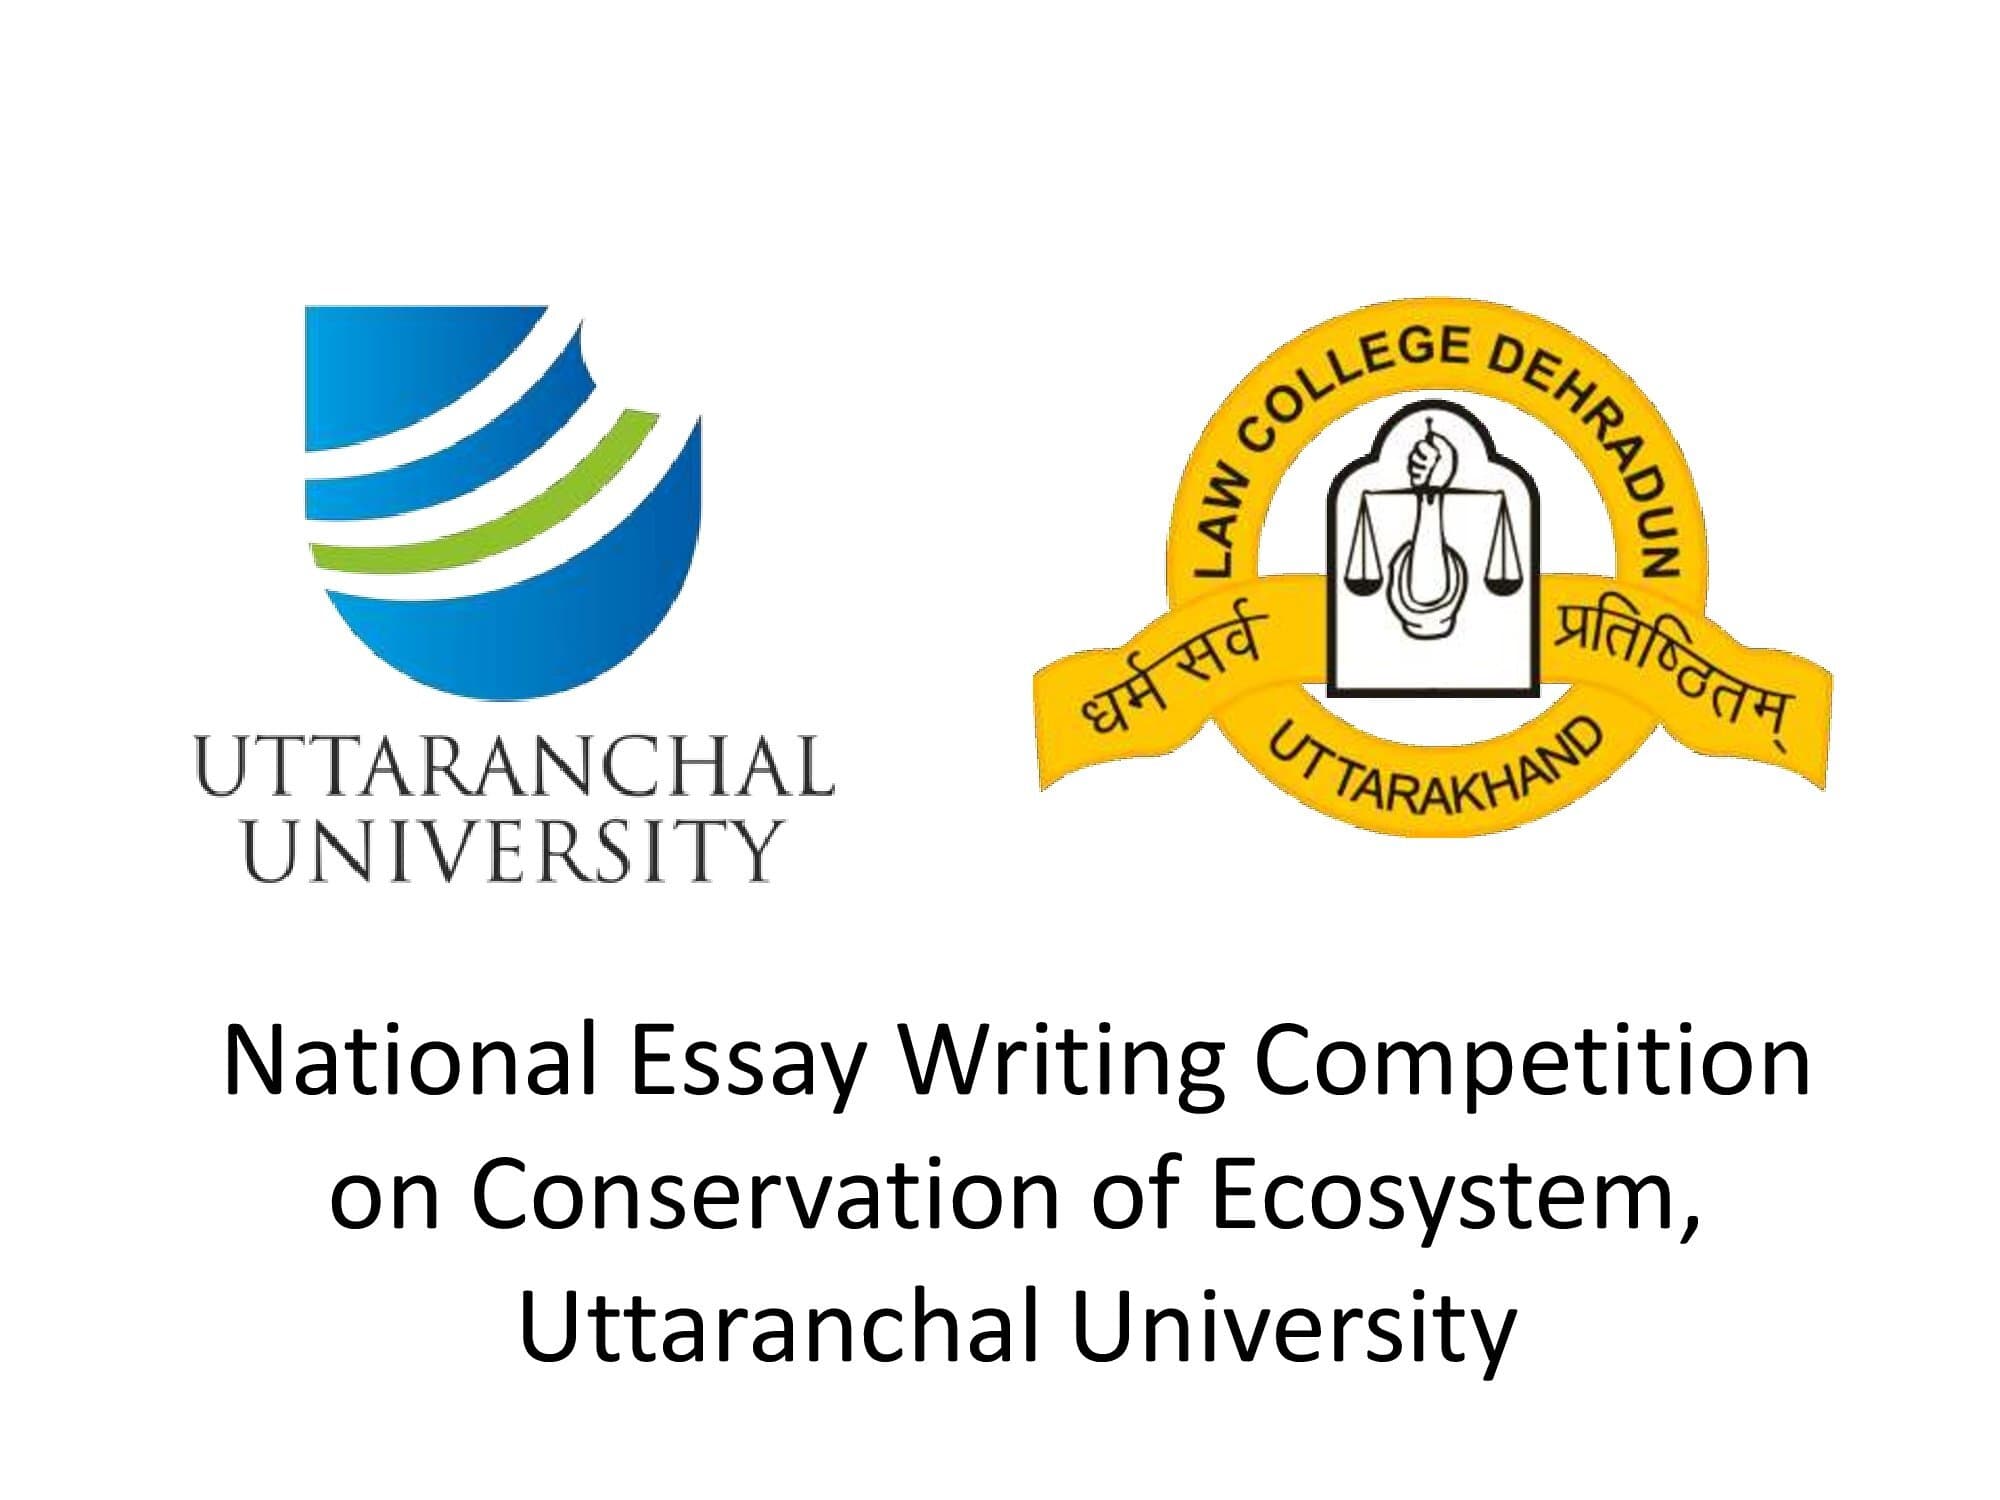 National Essay Writing Competition on Conservation of Ecosystem, Uttaranchal University